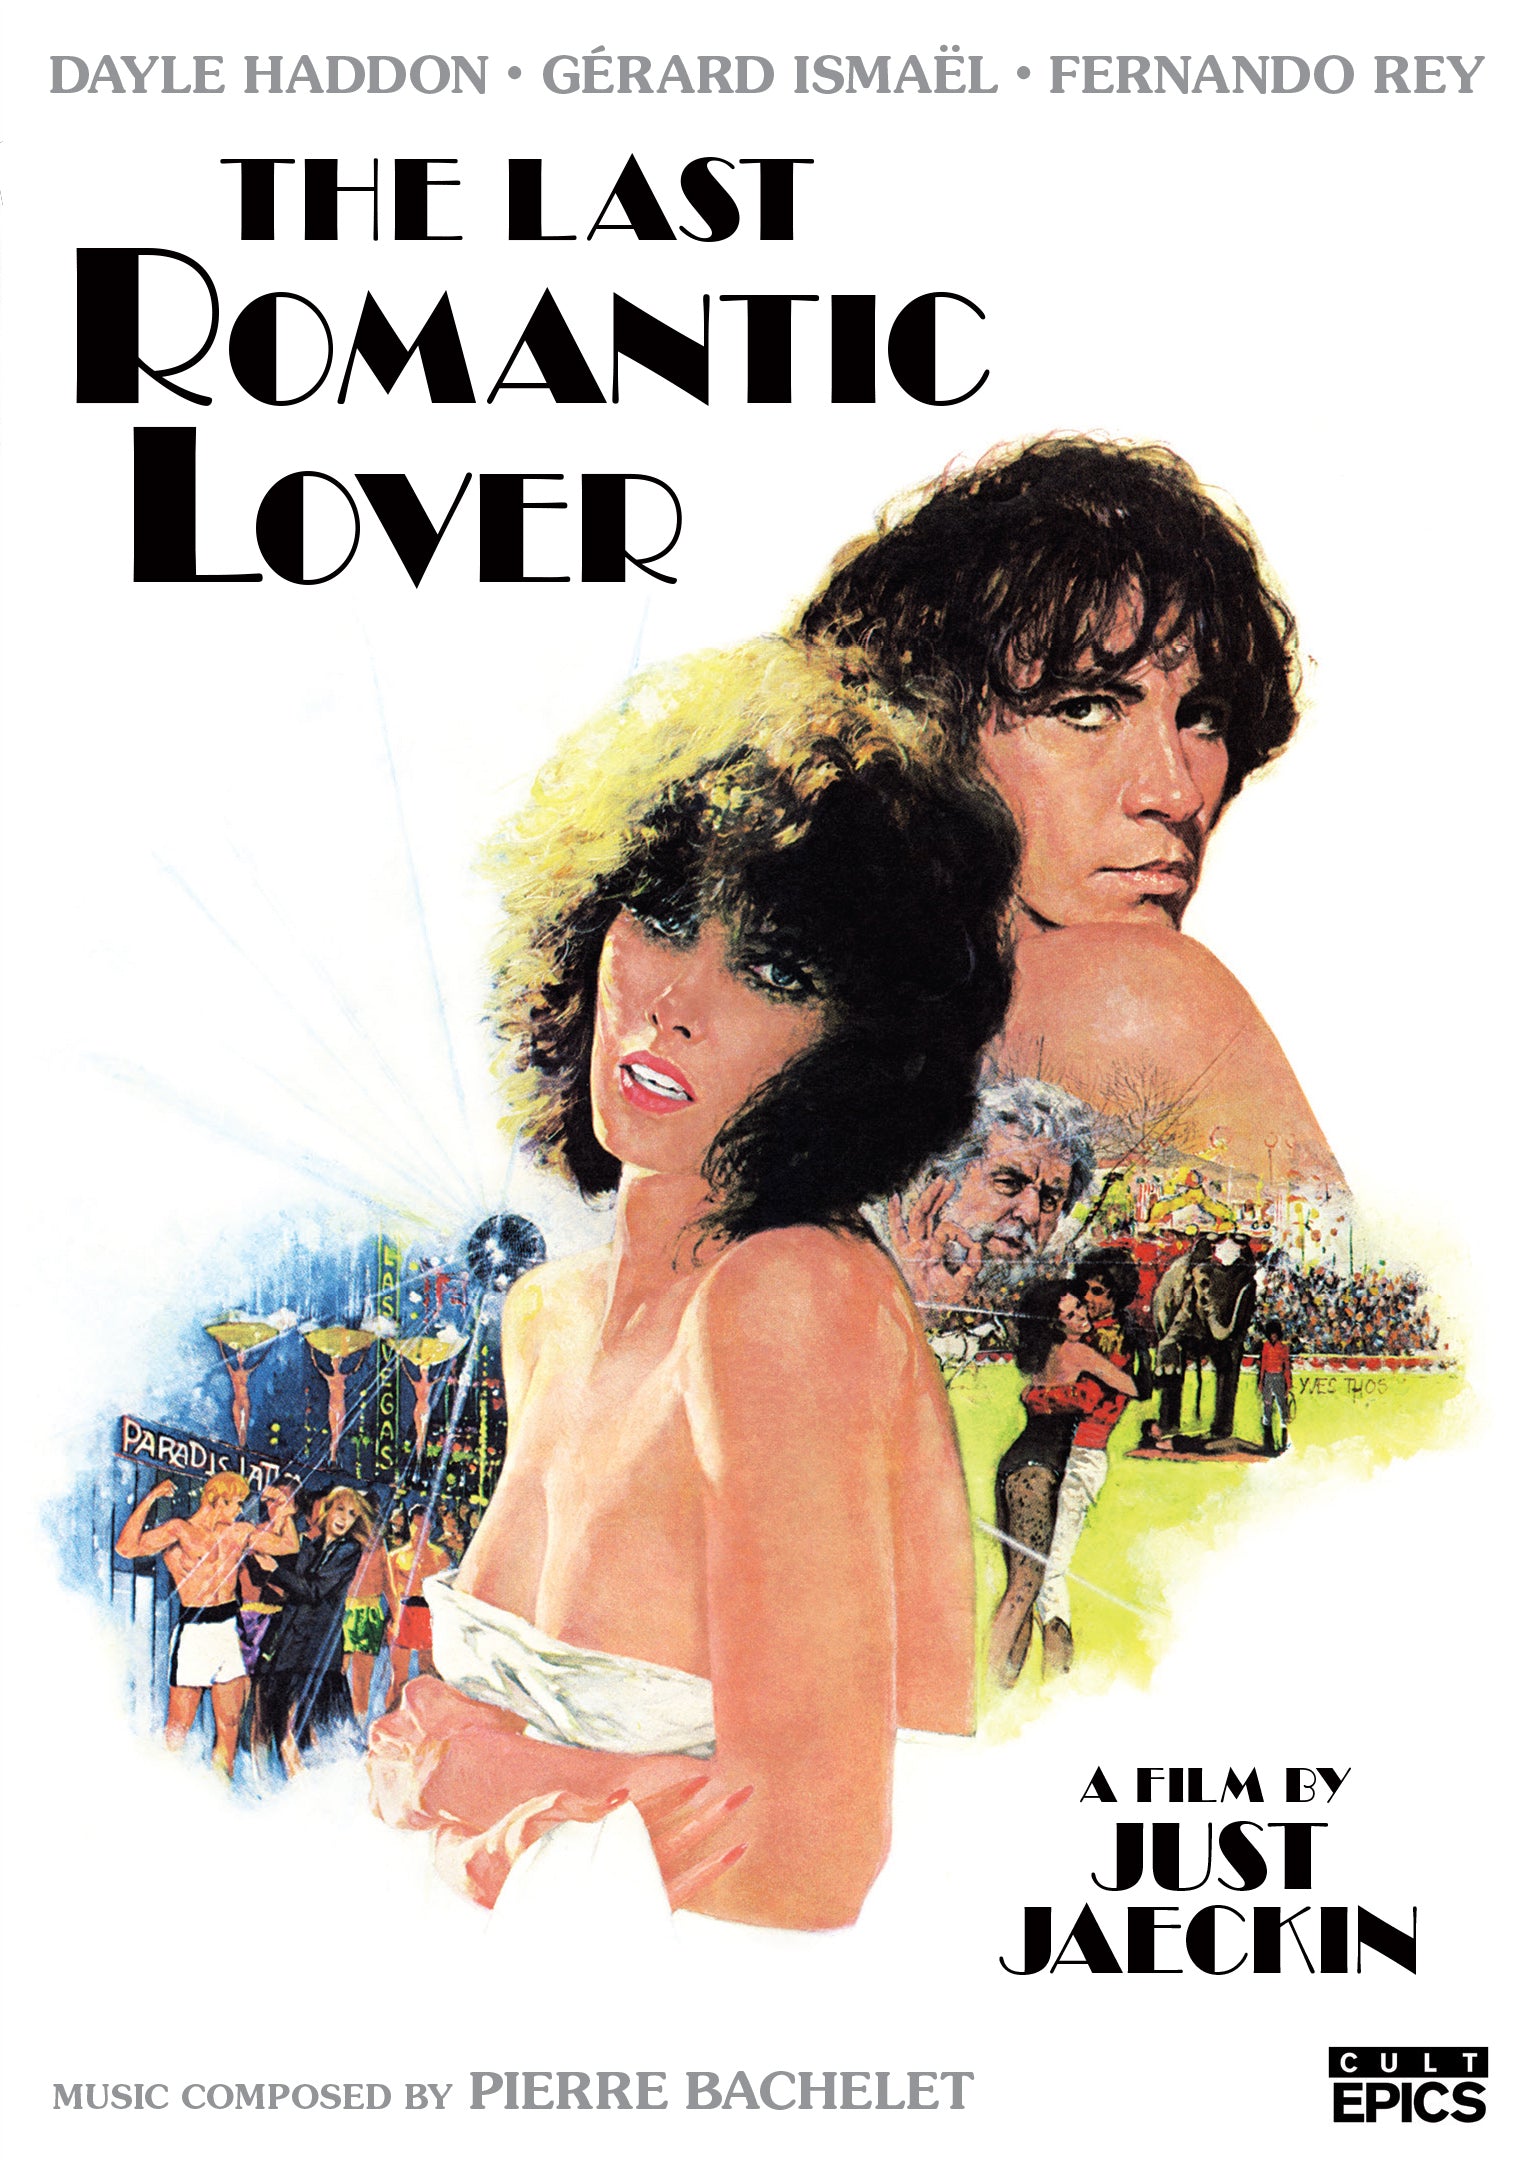 THE LAST ROMANTIC LOVER DVD